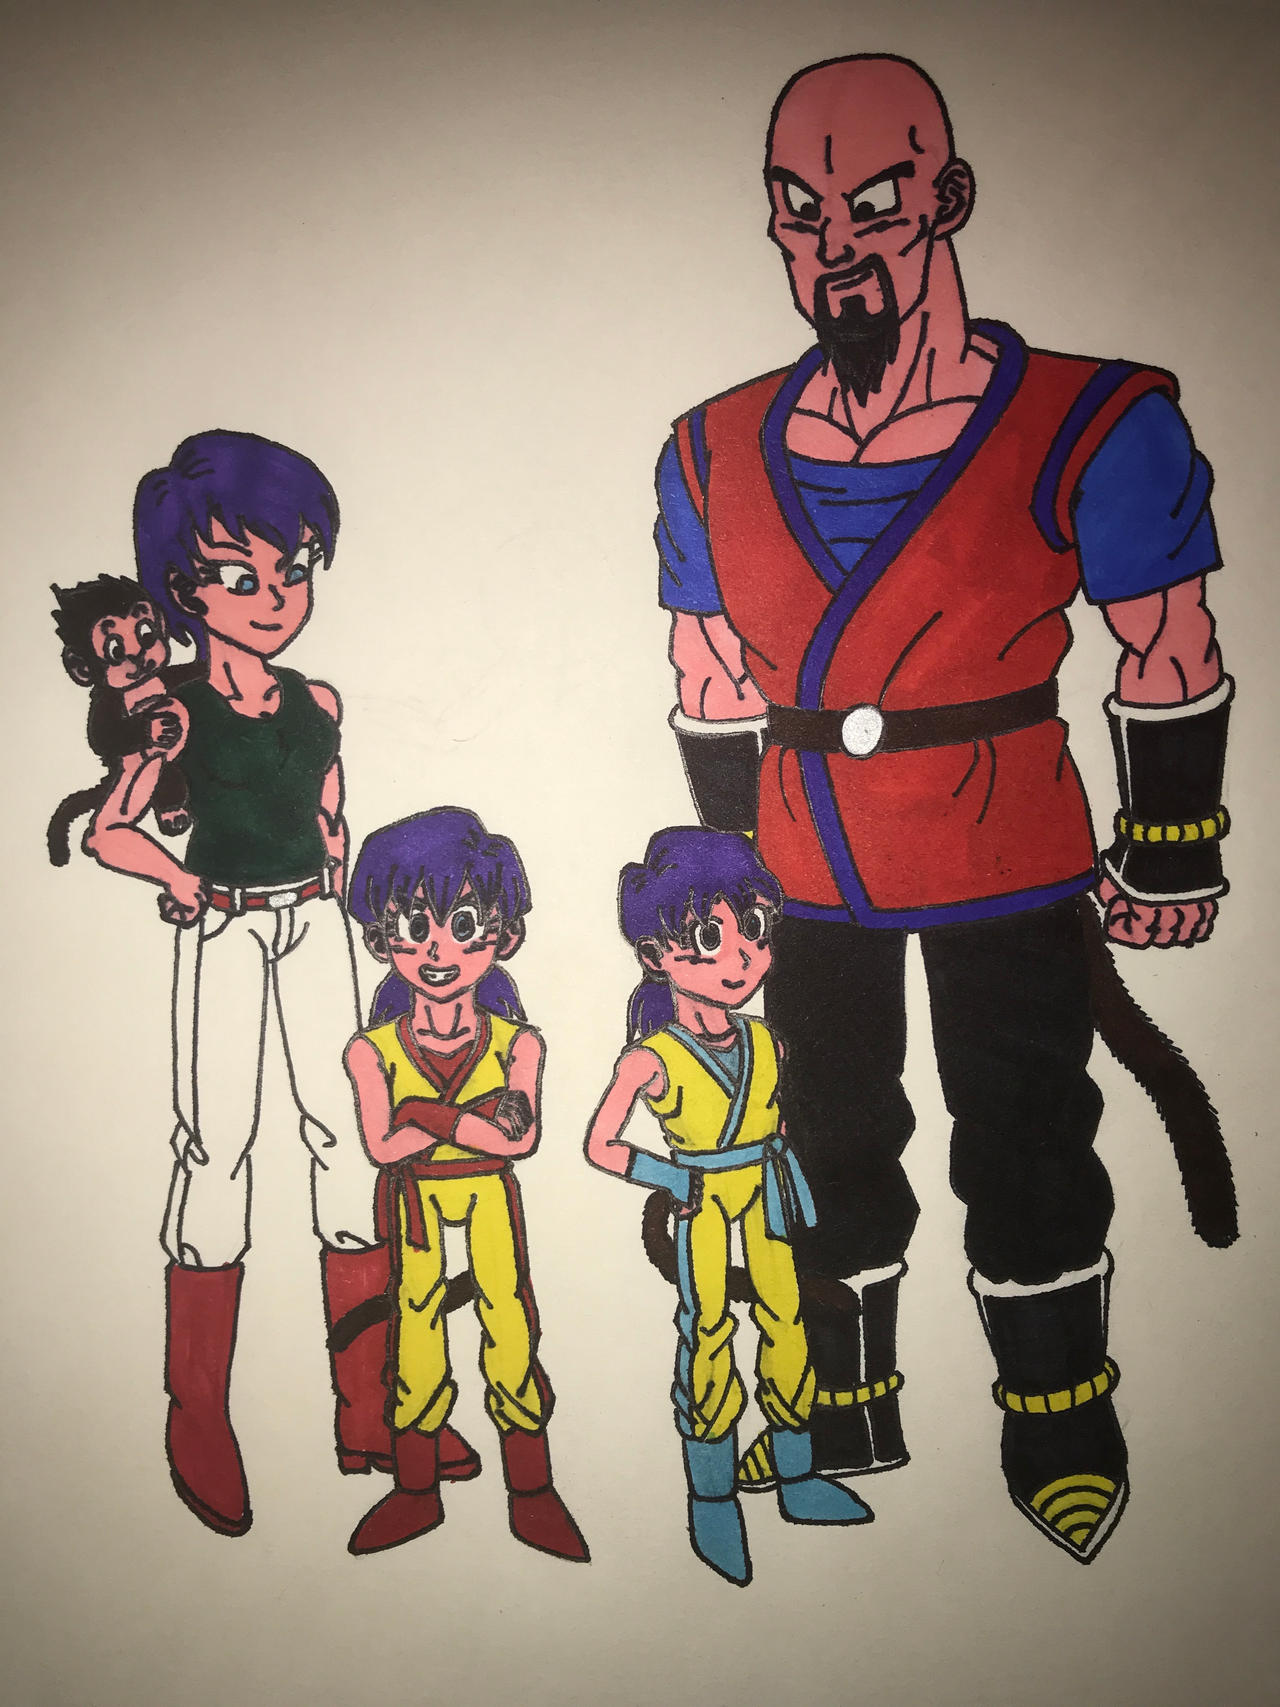 Dragon Ball Super – Broly terá Radtiz, Nappa e a mãe de Goku